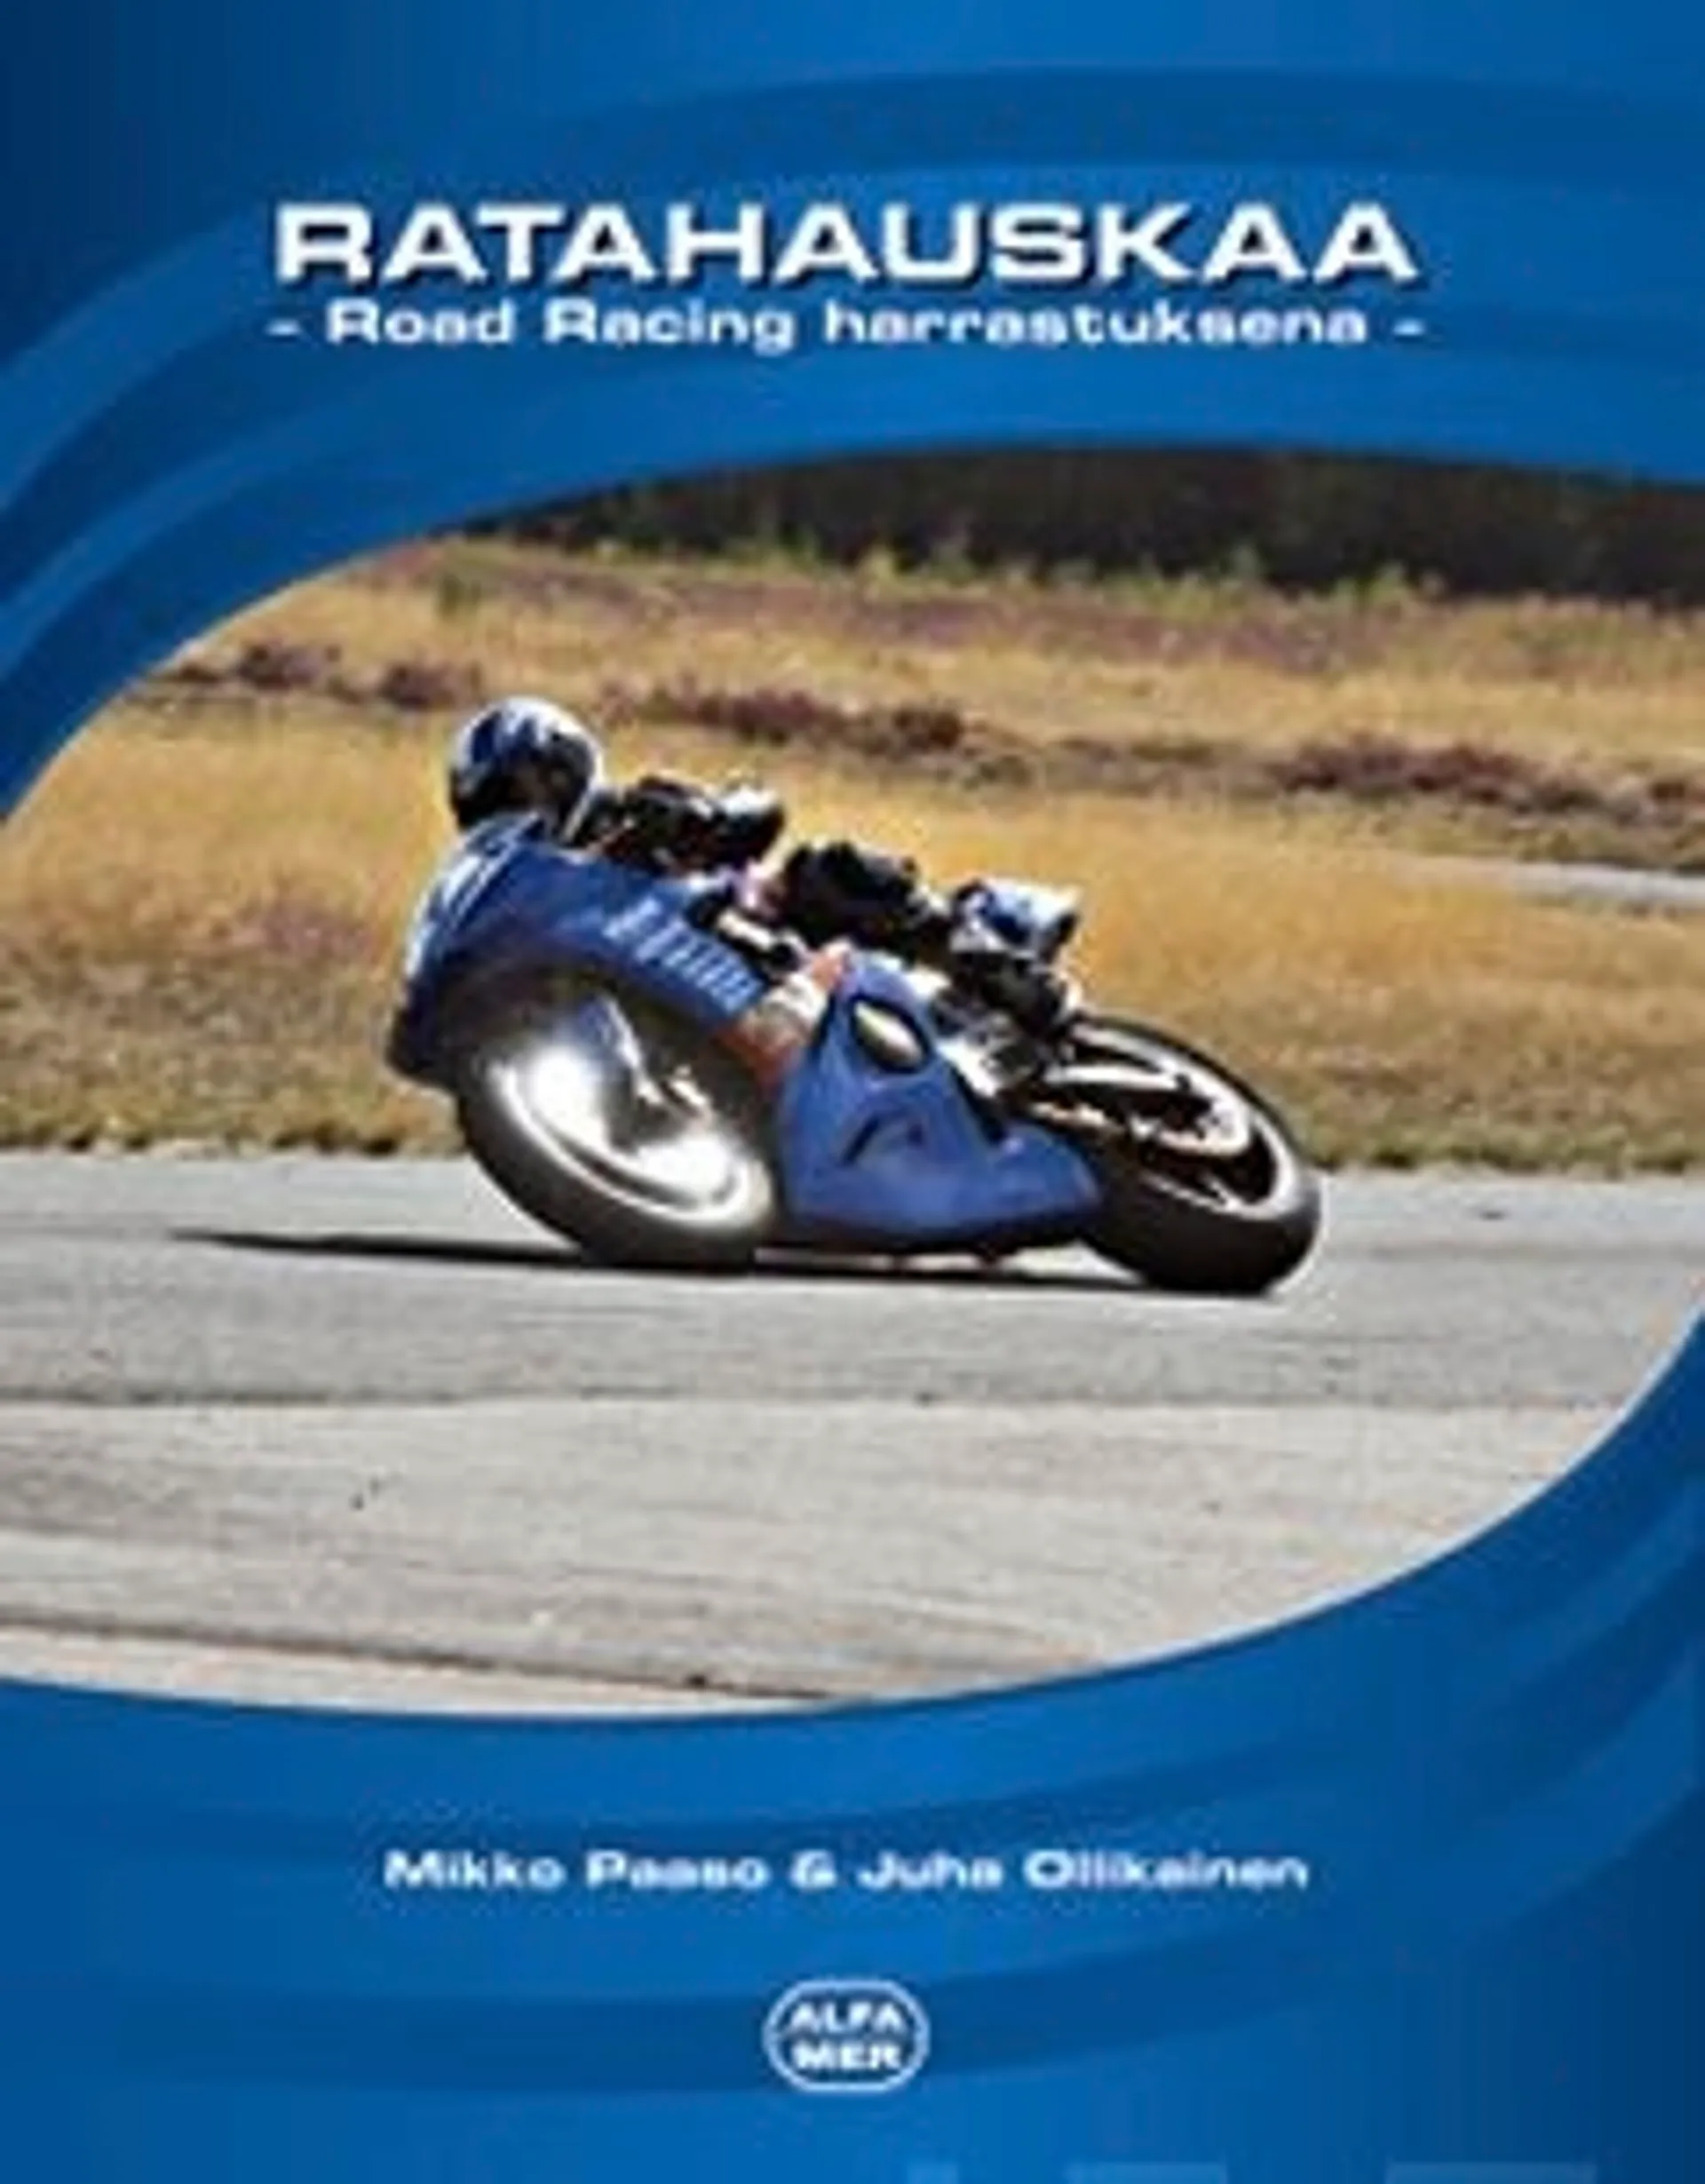 Paaso, Ratahauskaa - Road Racing harrastuksena